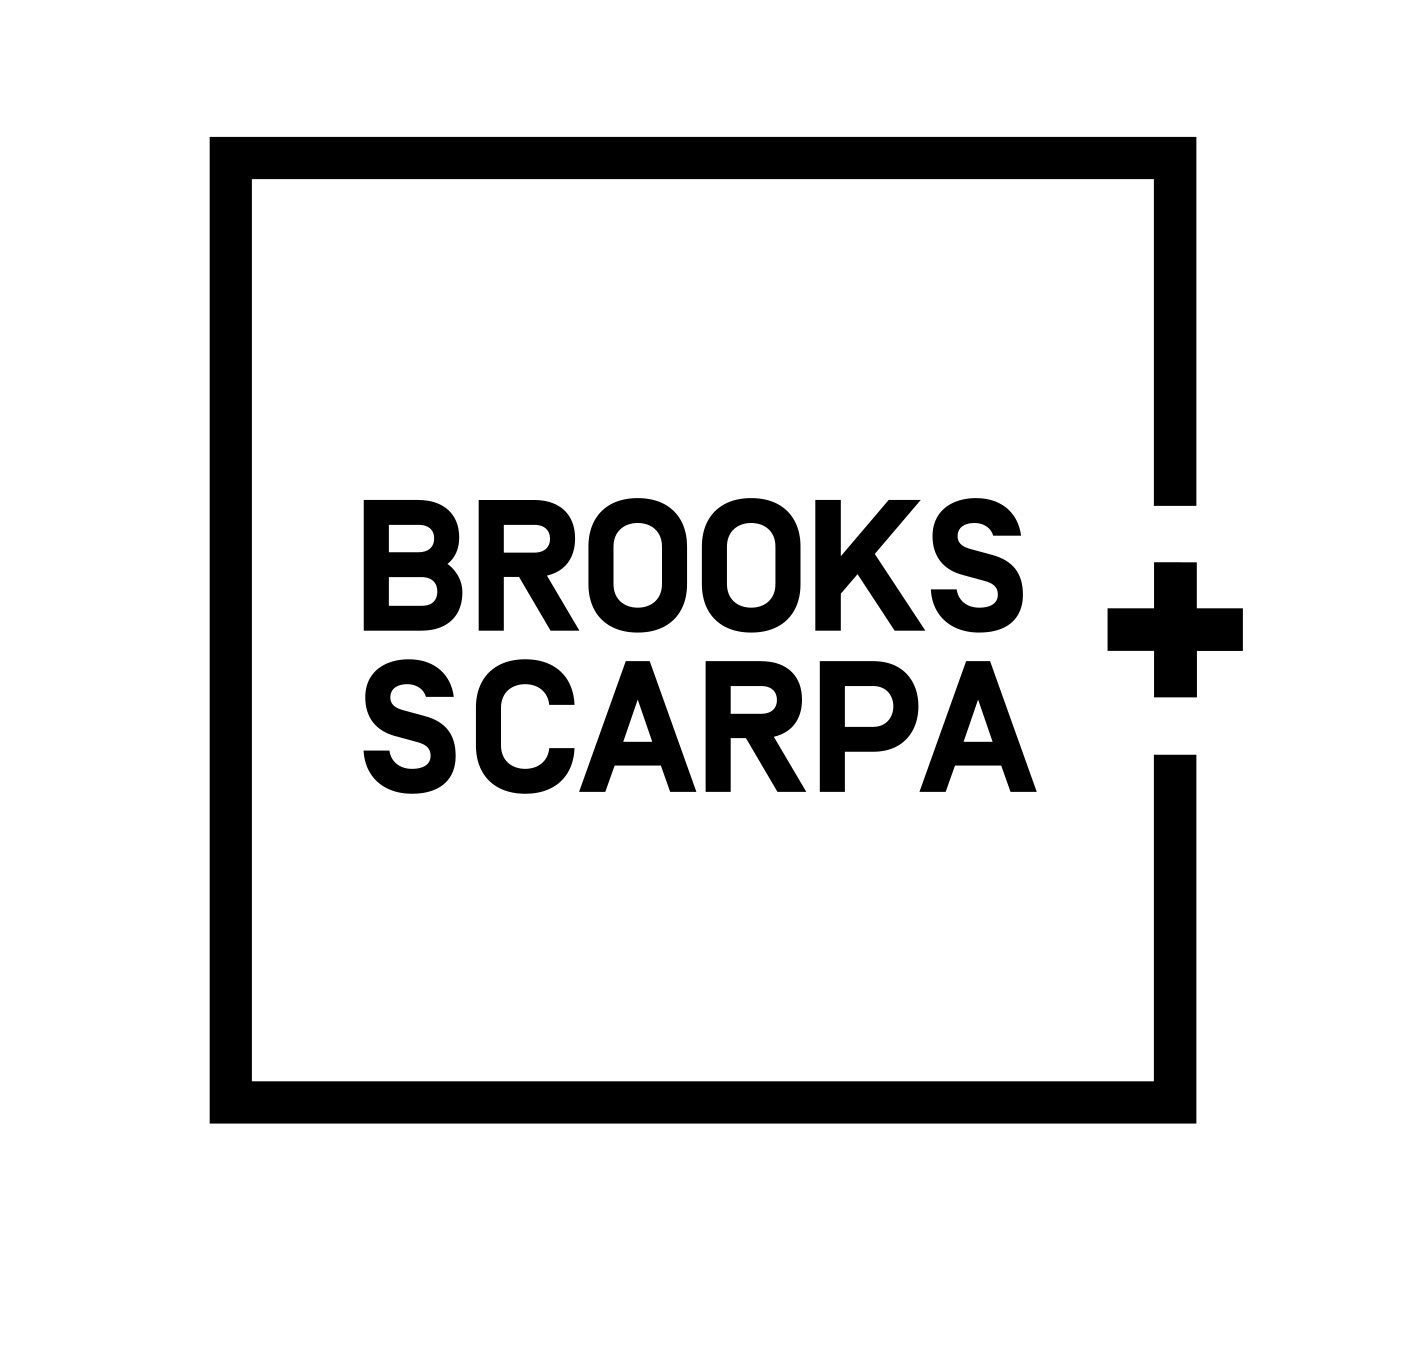 Ordinary and Extraordinary Brooks Scarpa Epub-Ebook